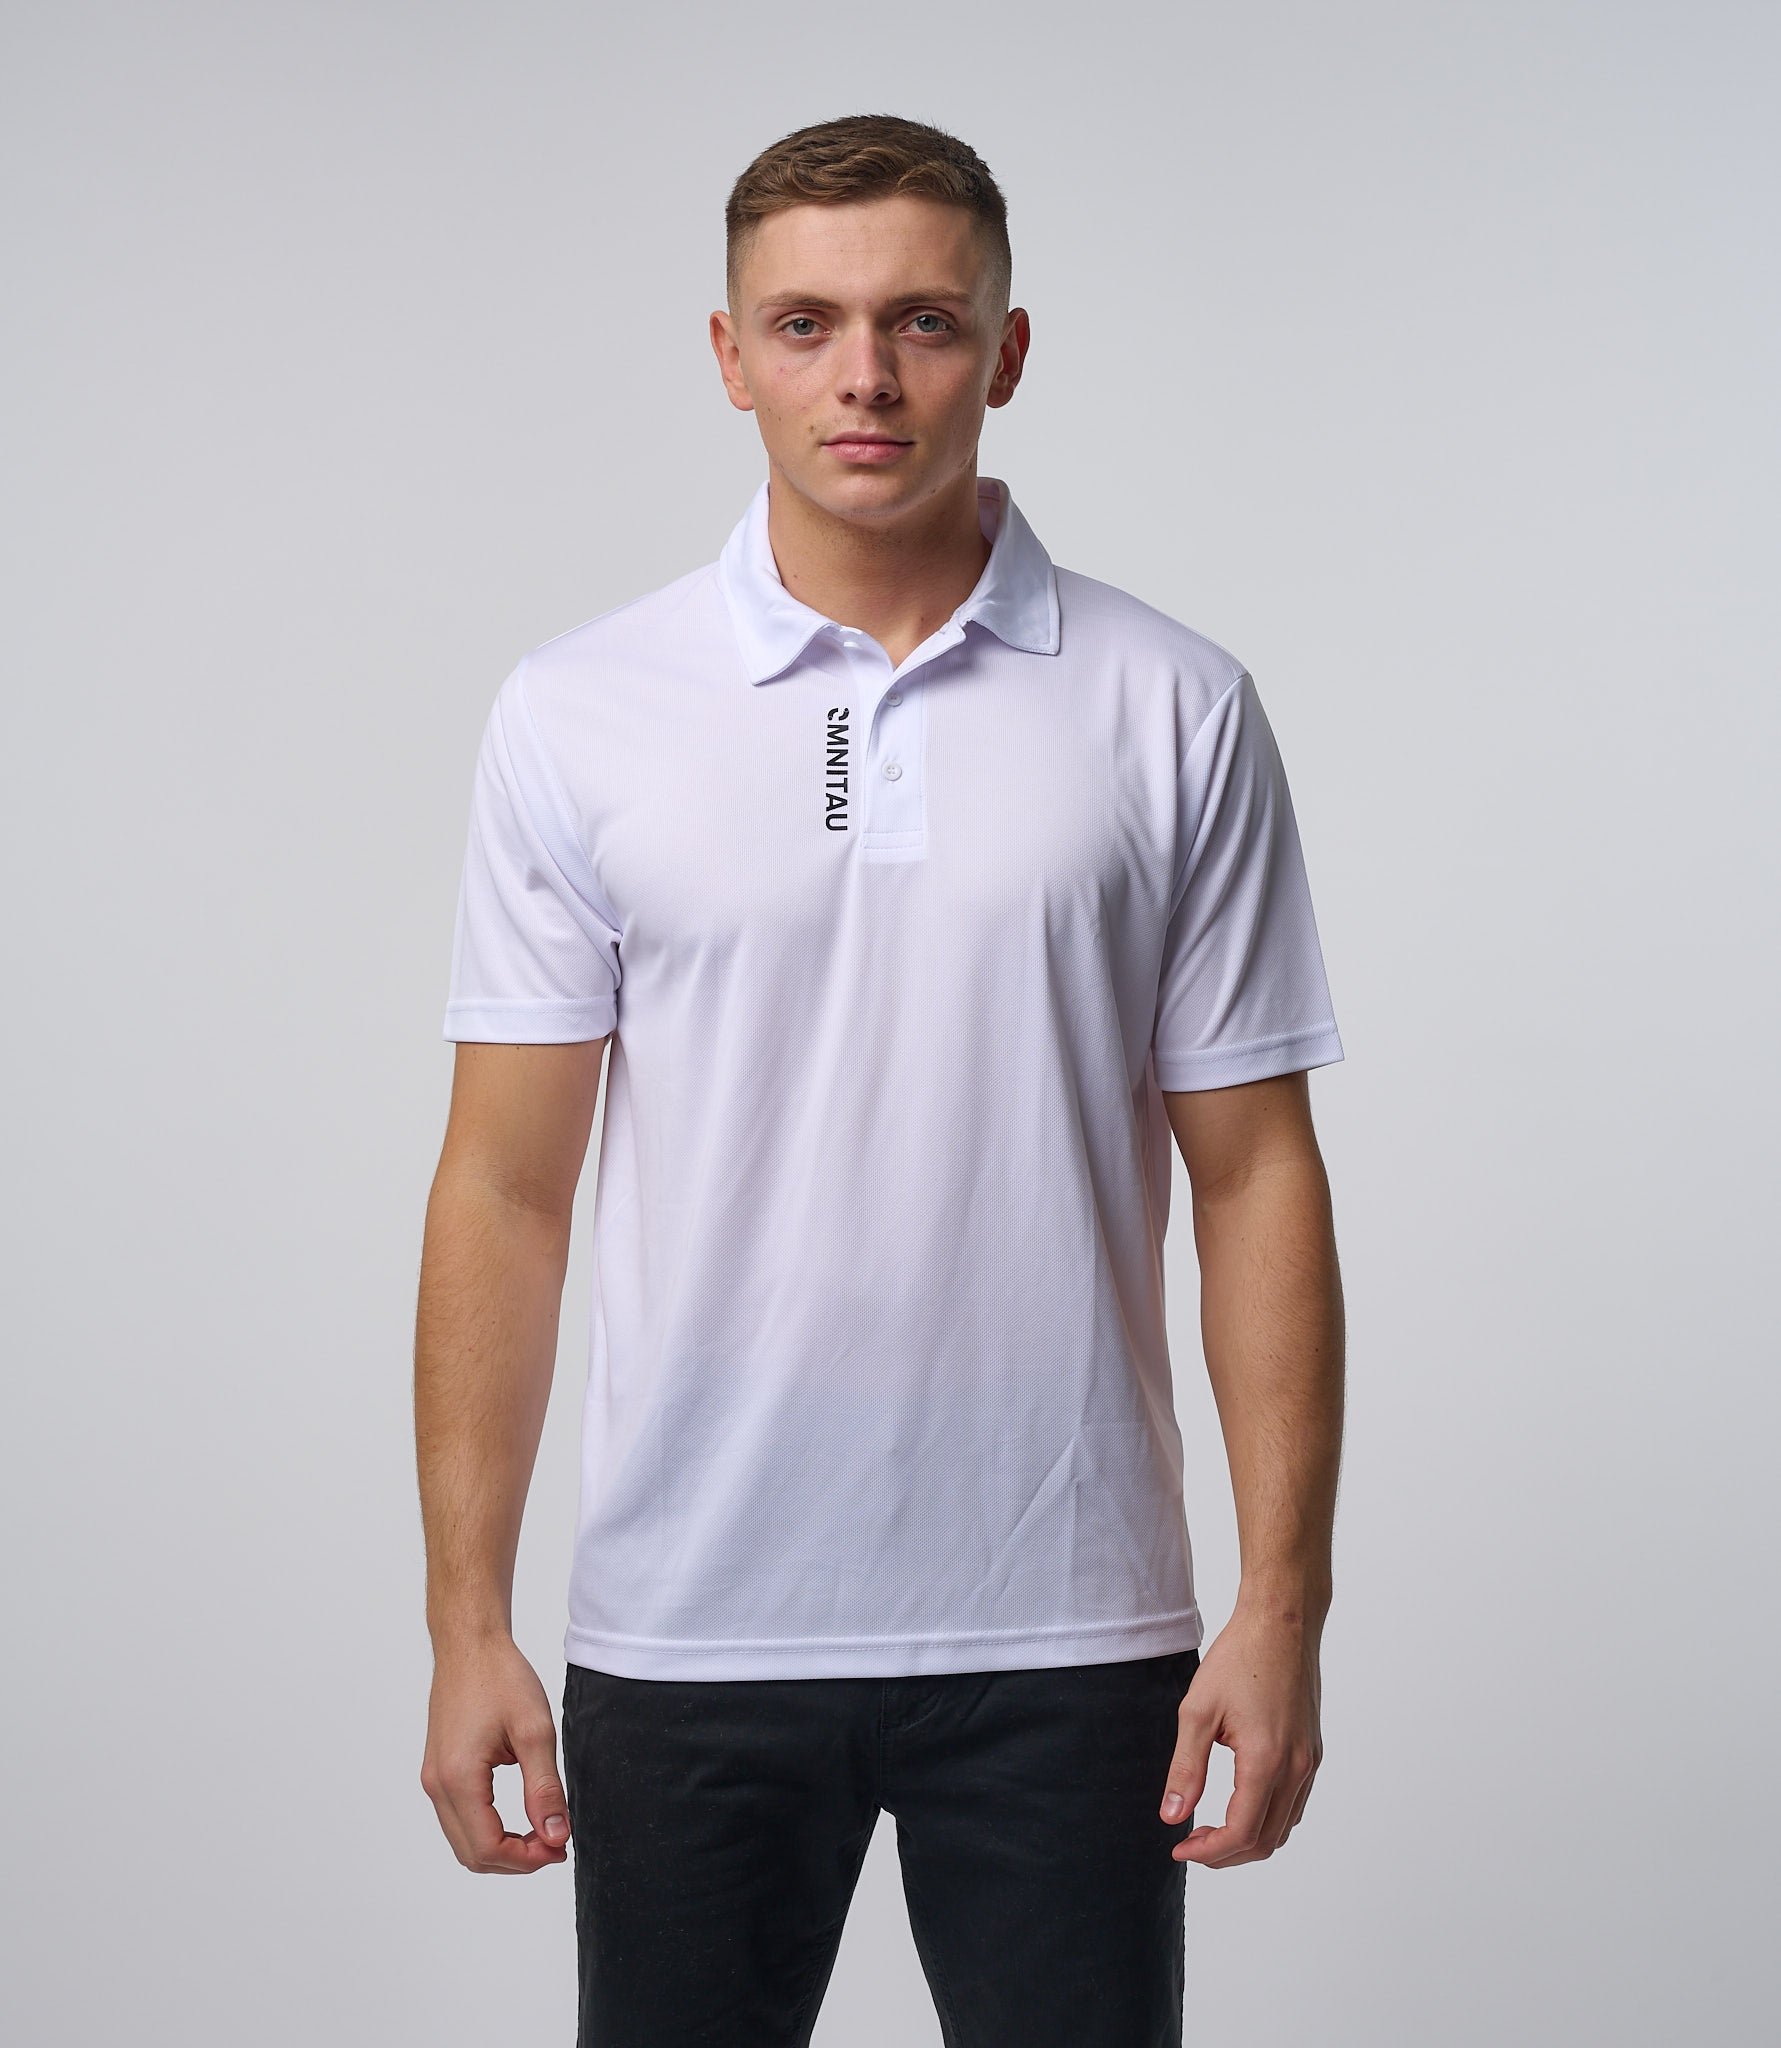 Omnitau Men's Sustainable Breathable Classic Golf Polo Shirt - White